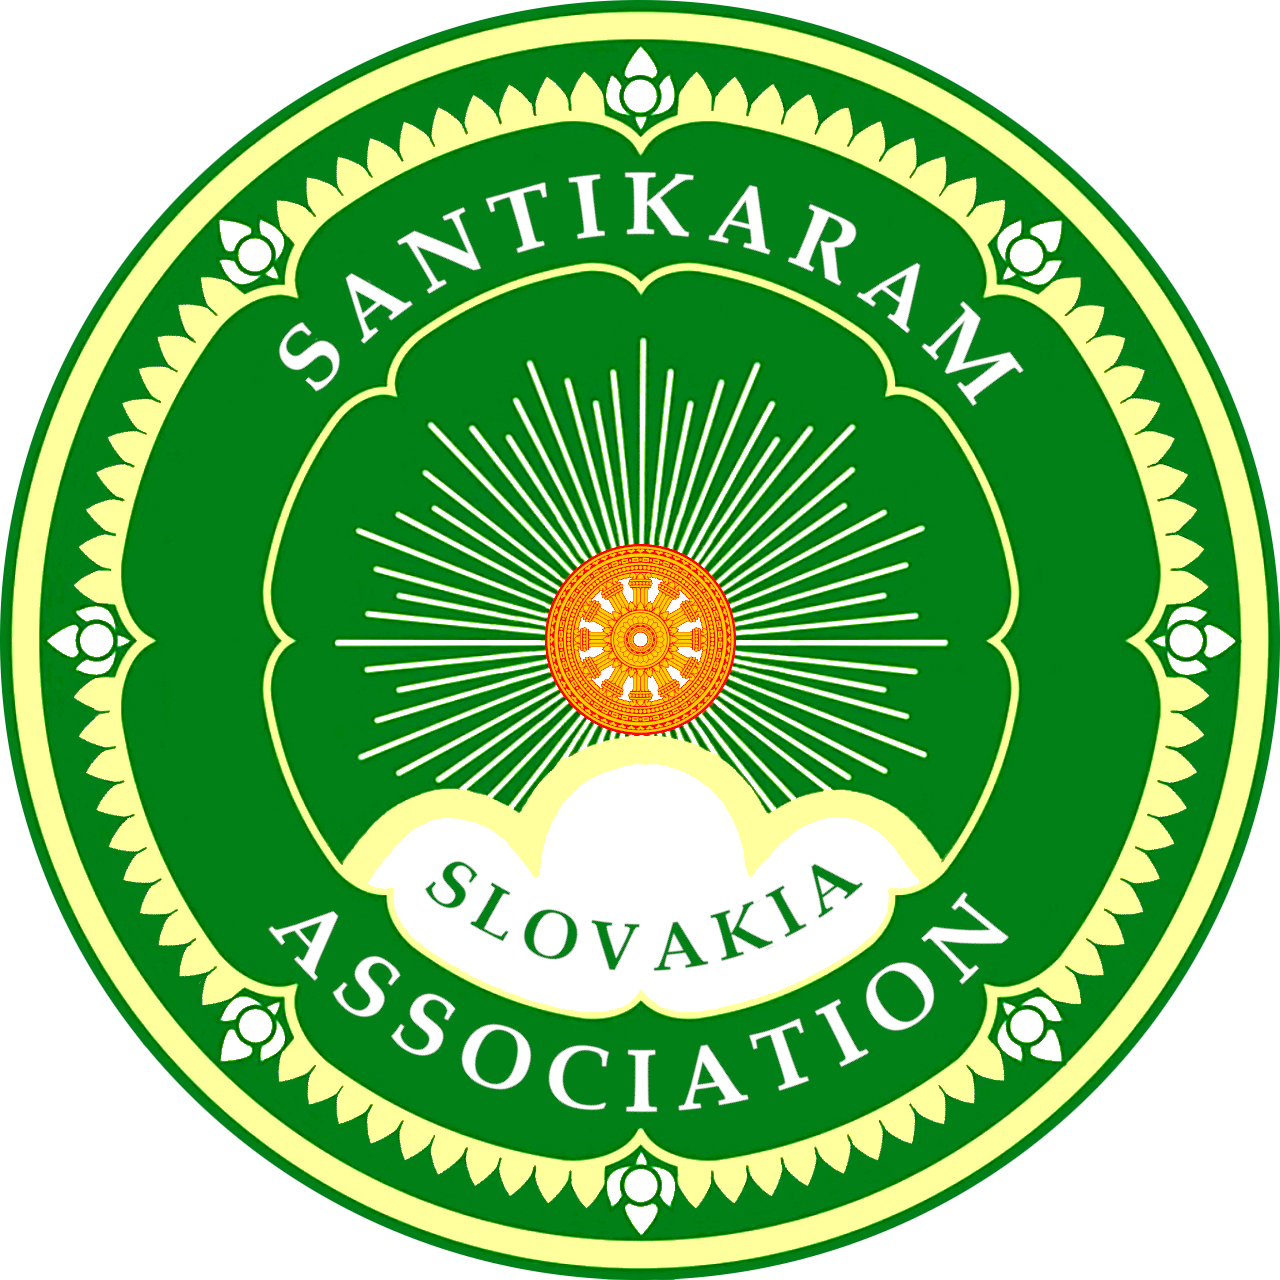 Santikaram Association Slovakia Logo